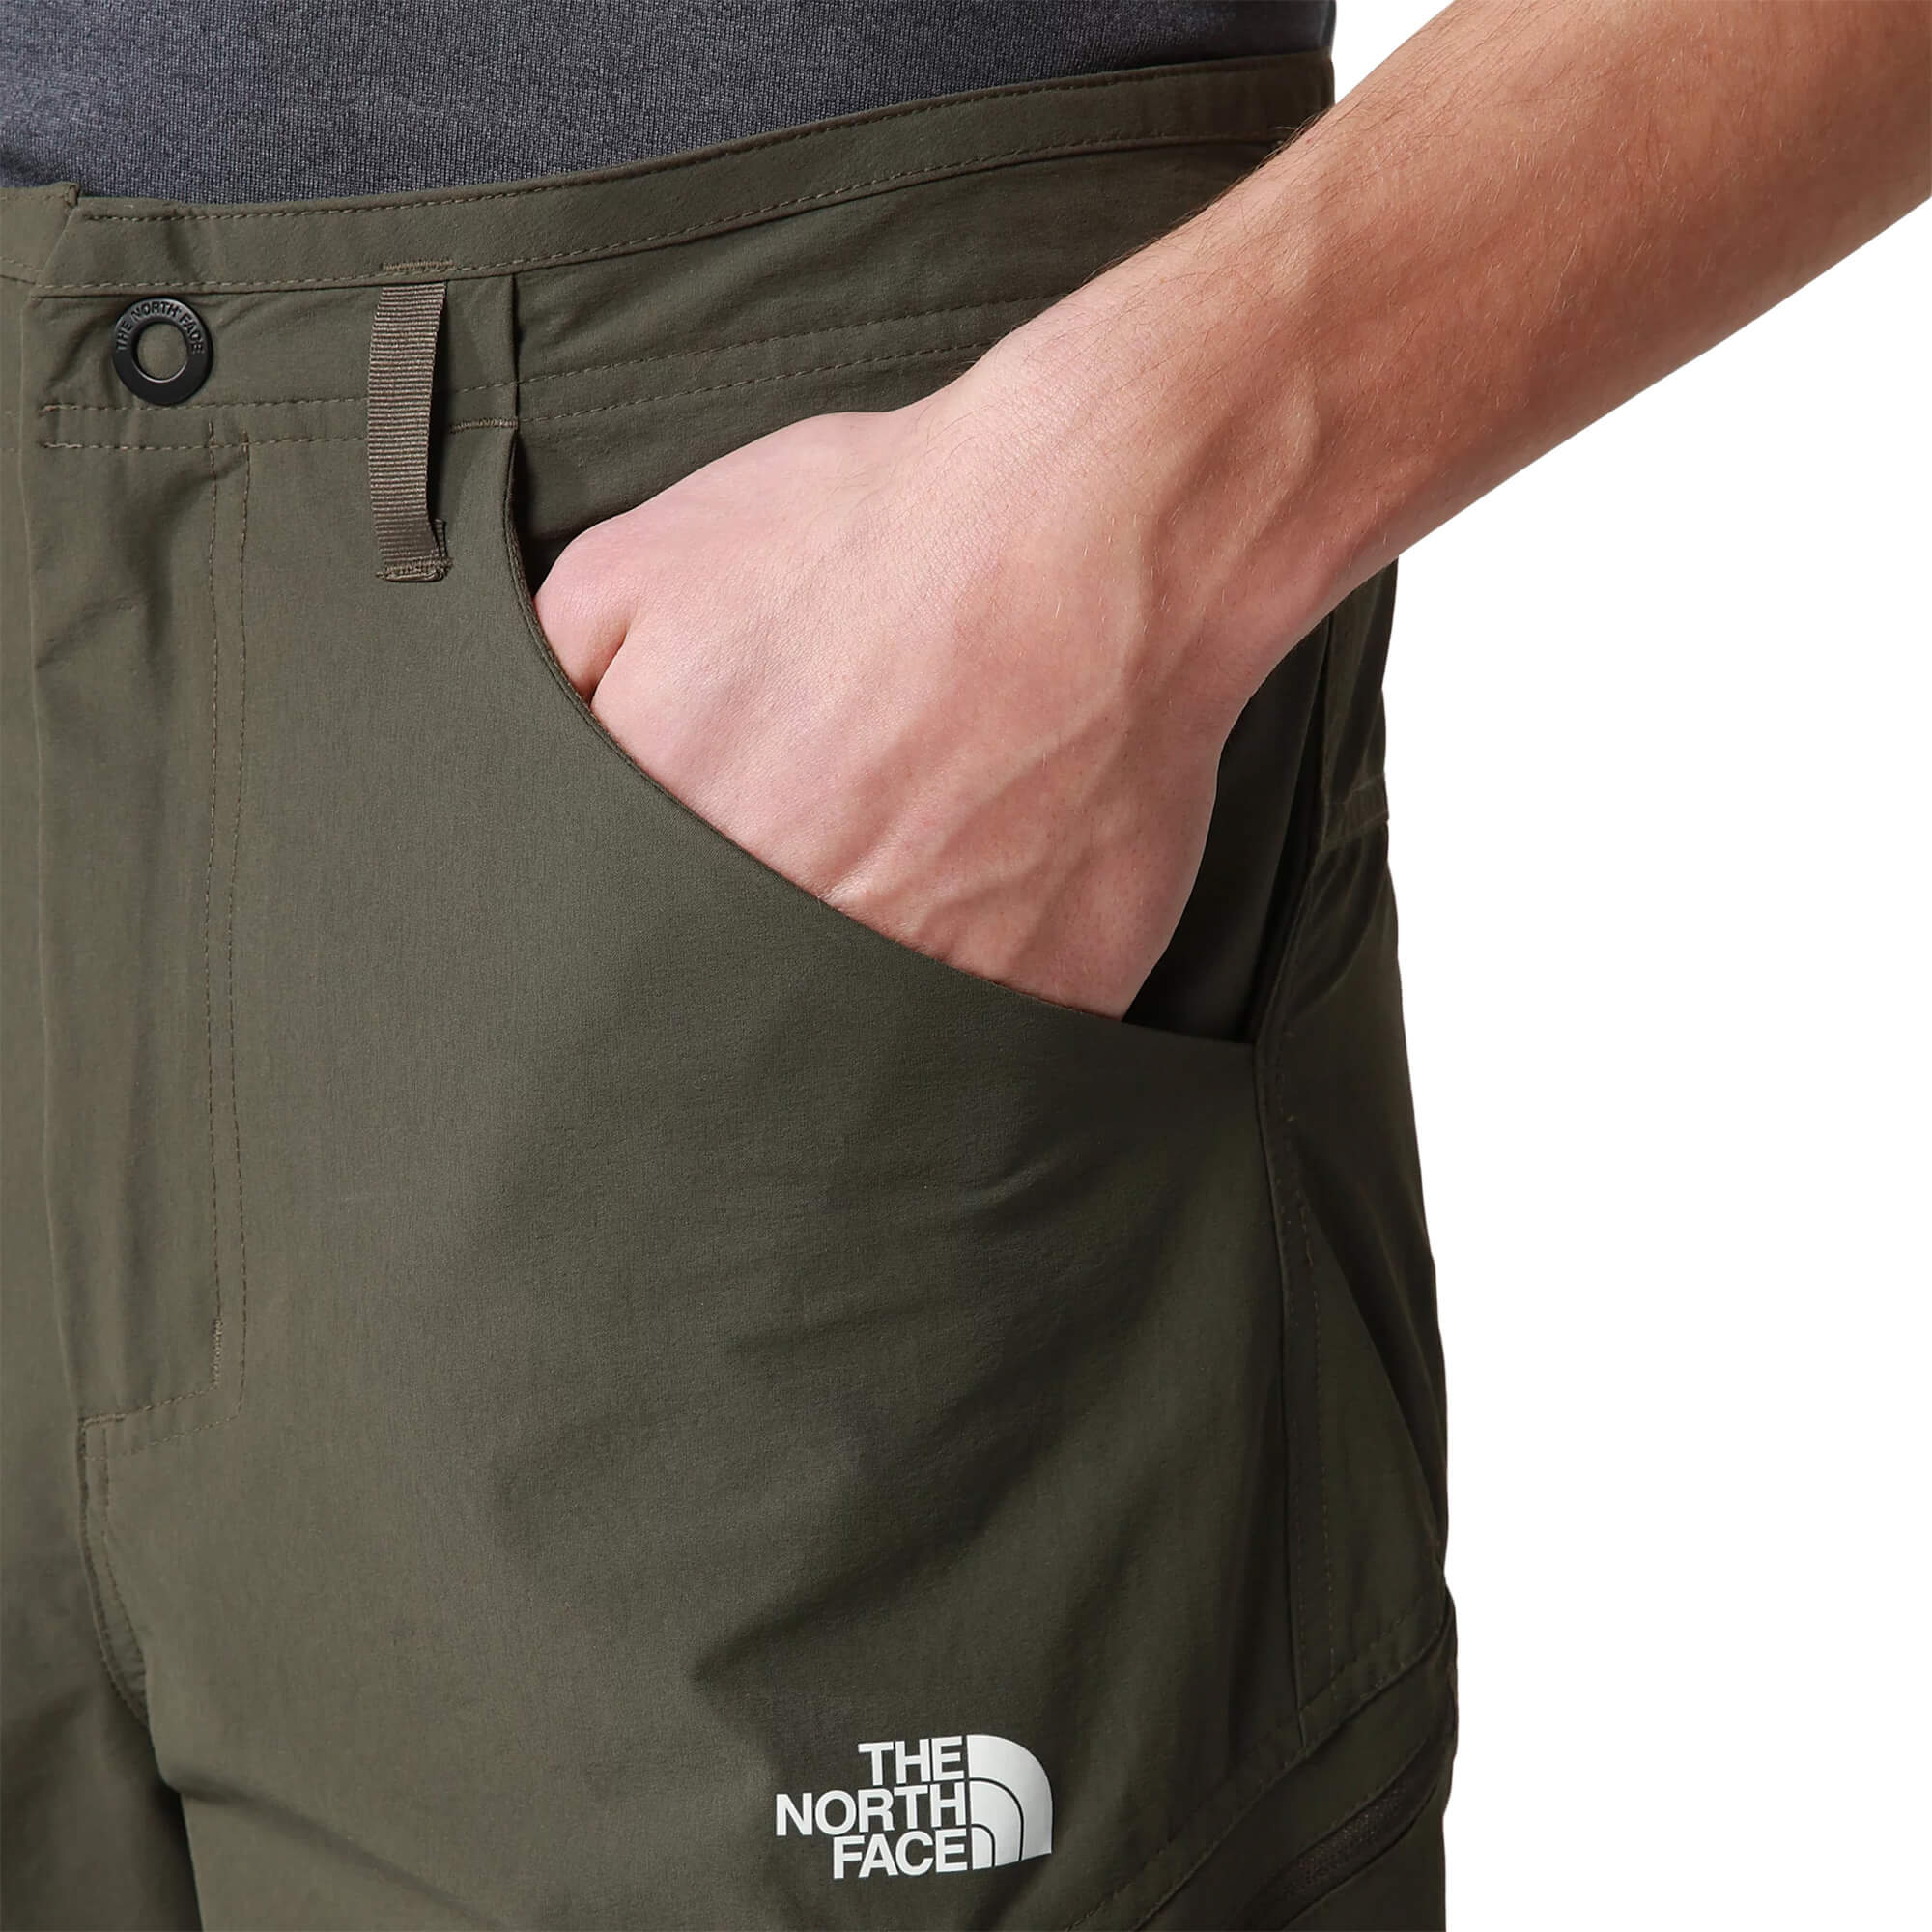 TheNorthFace Mens AO Hiking Trousers (Asphalt Grey) | Sportpursuit.com